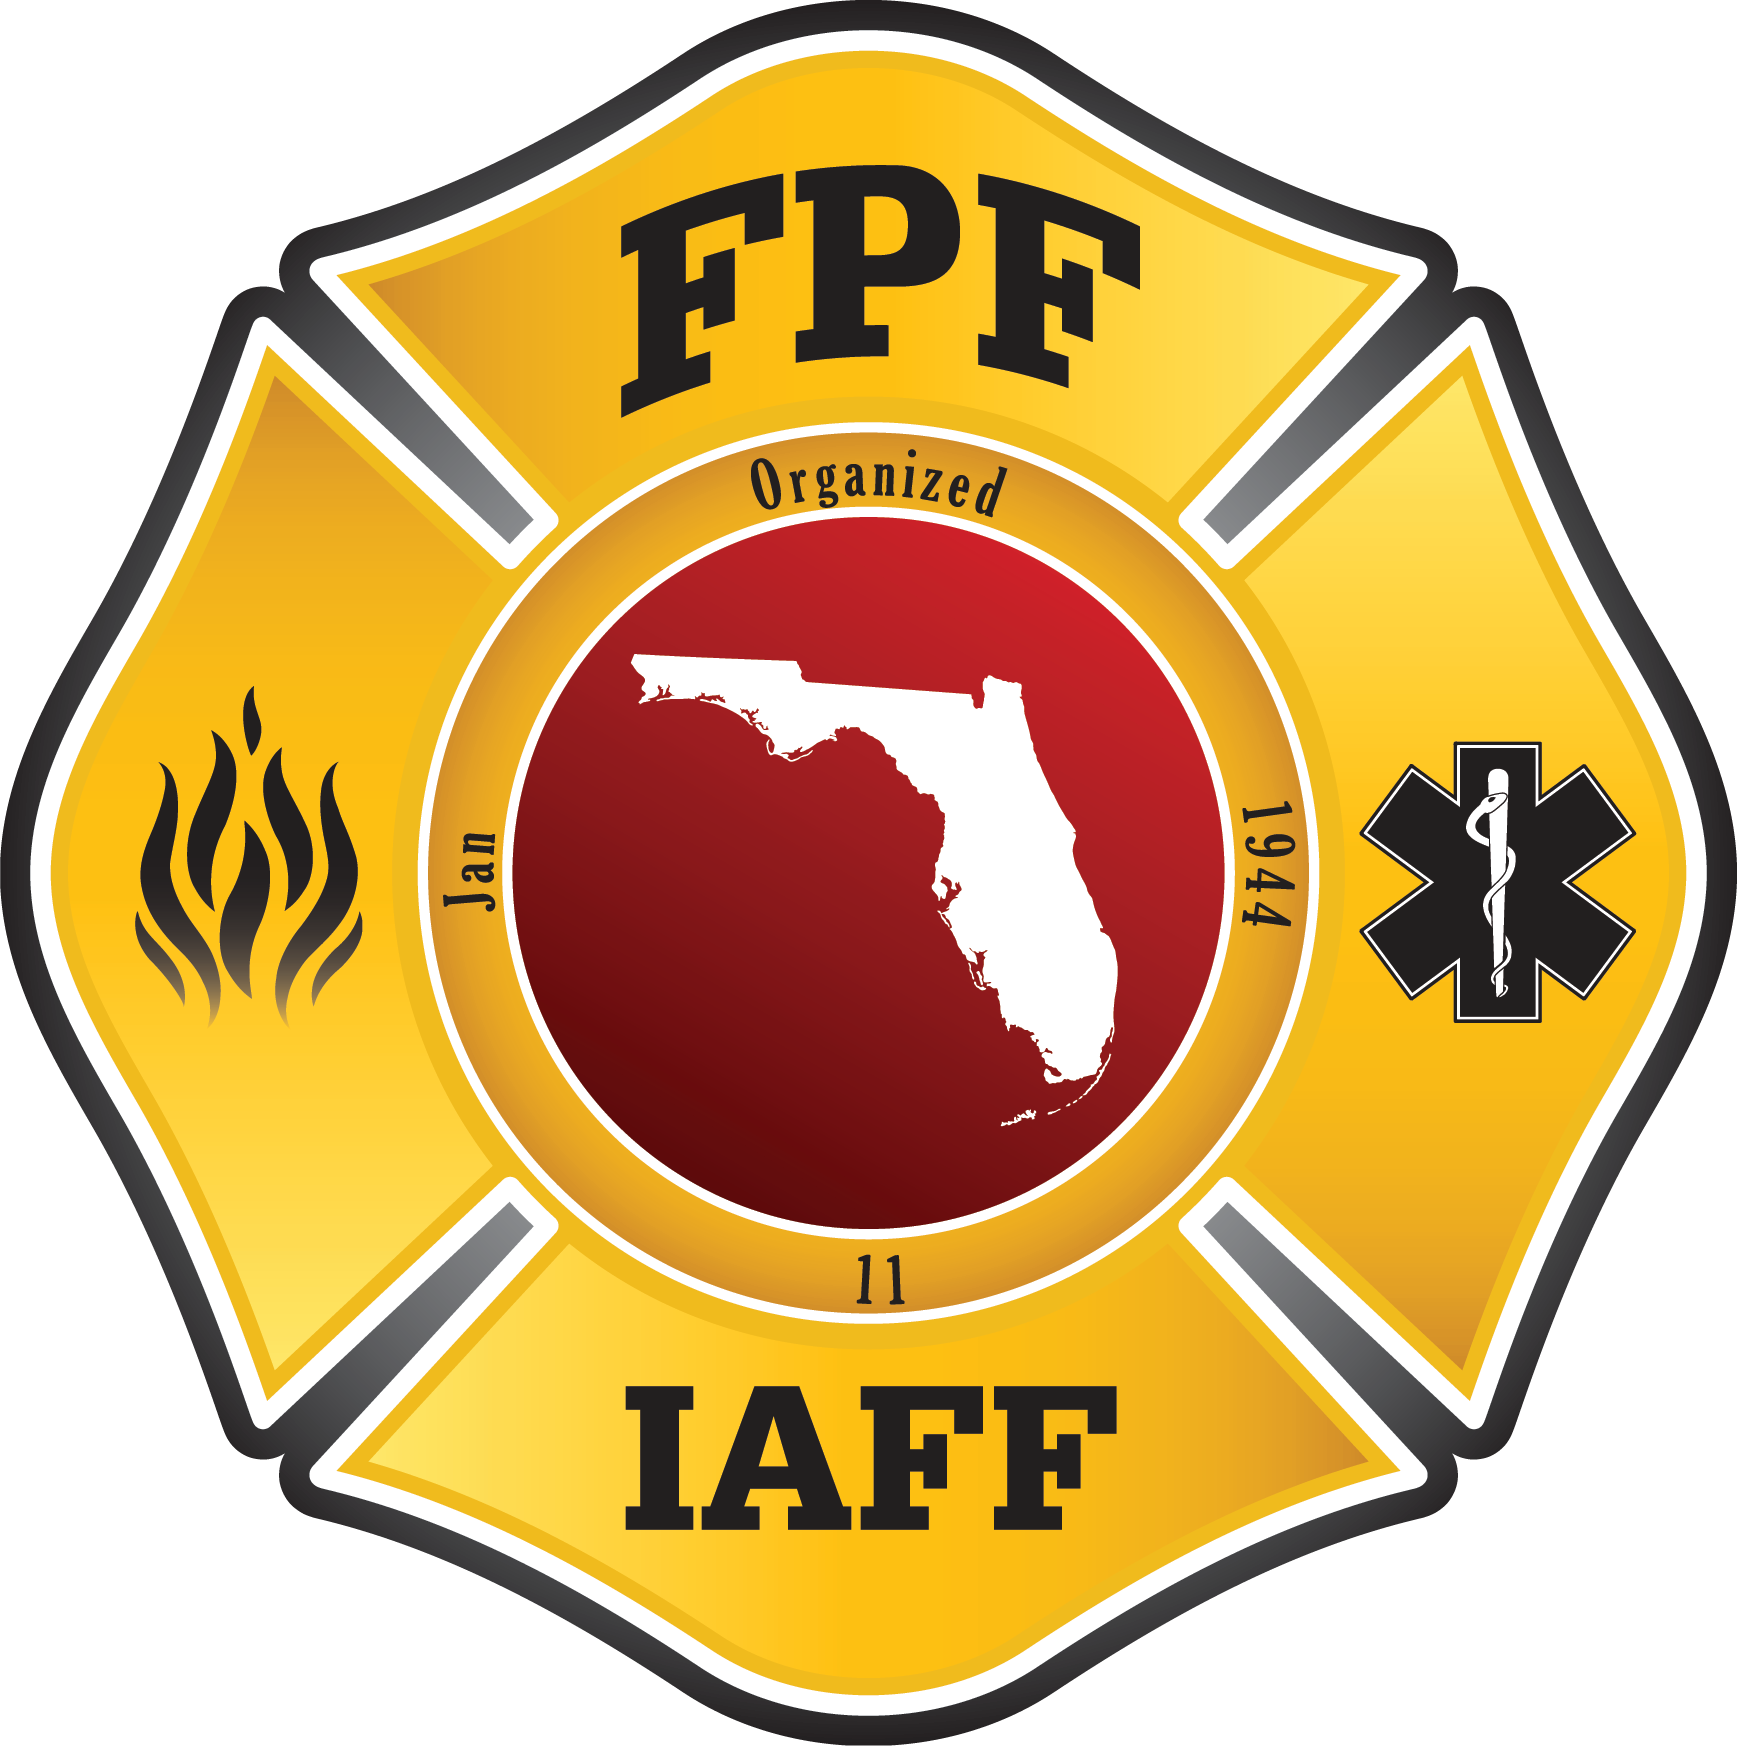 Florida Professoional Firefighters